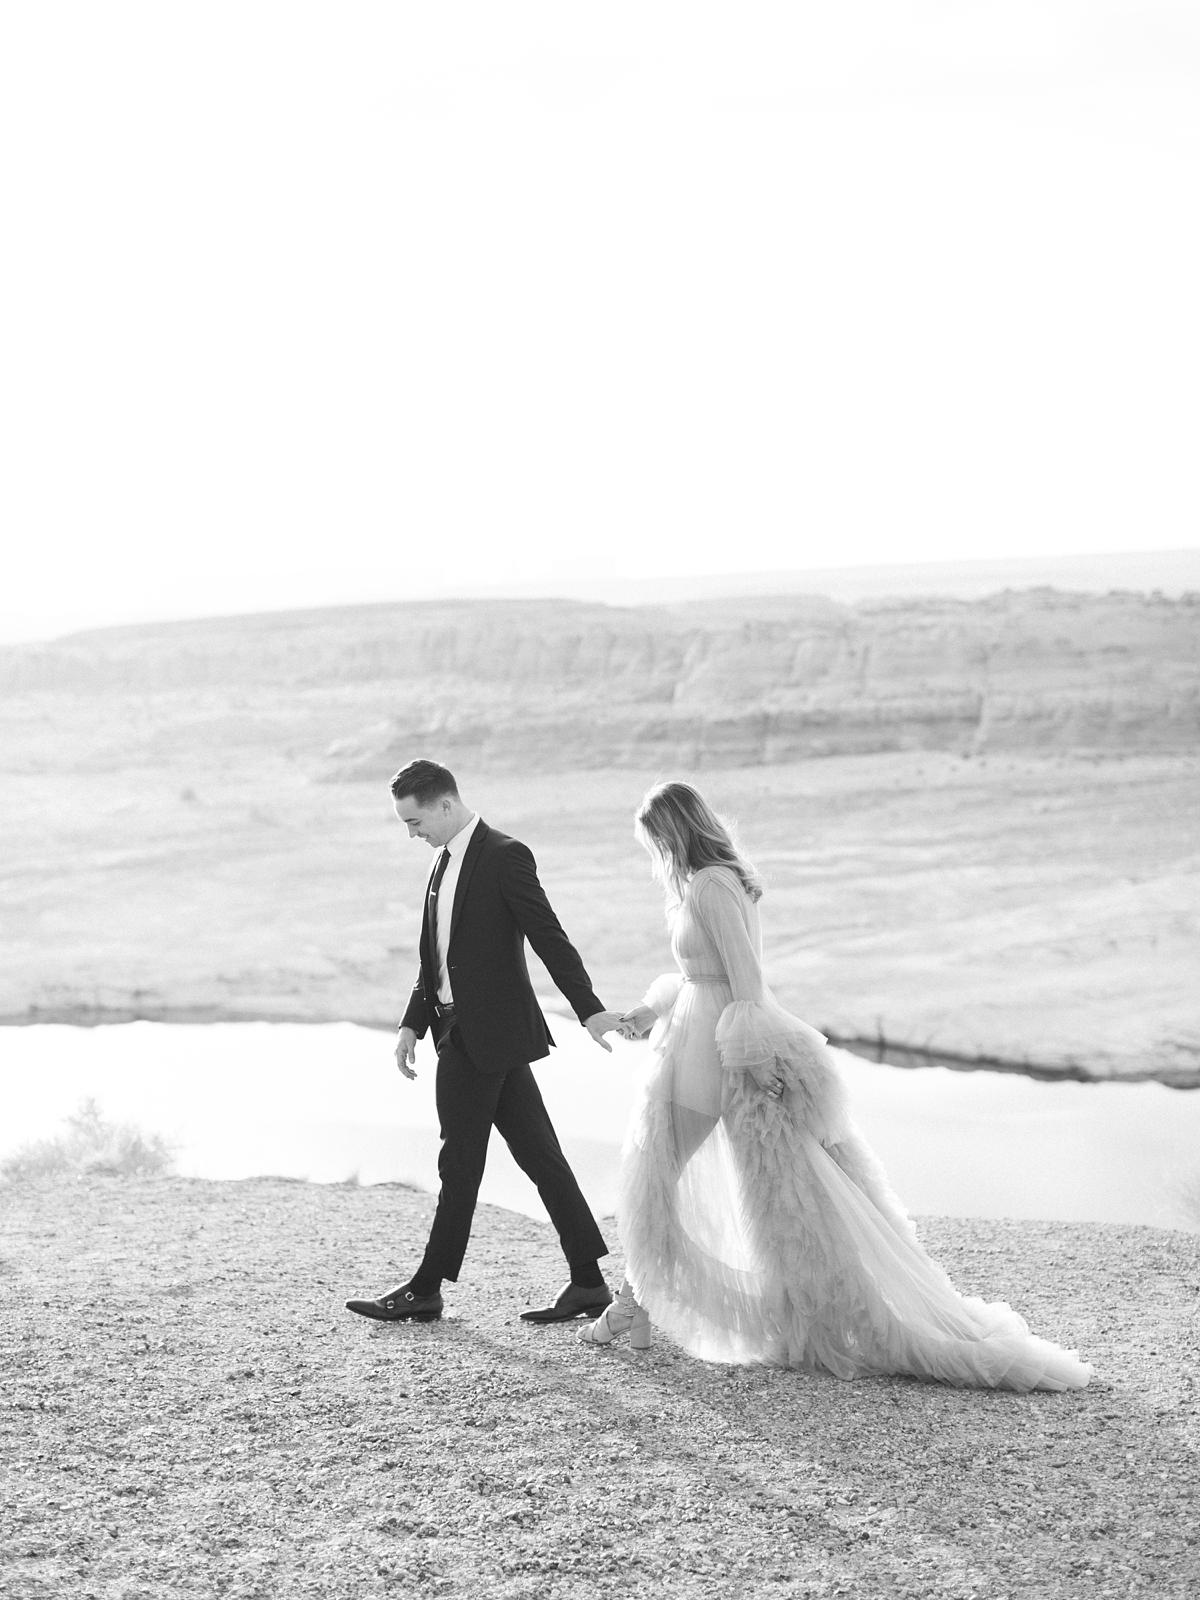 Lake Powell Elopement Editorial - San Diego Wedding Photographer